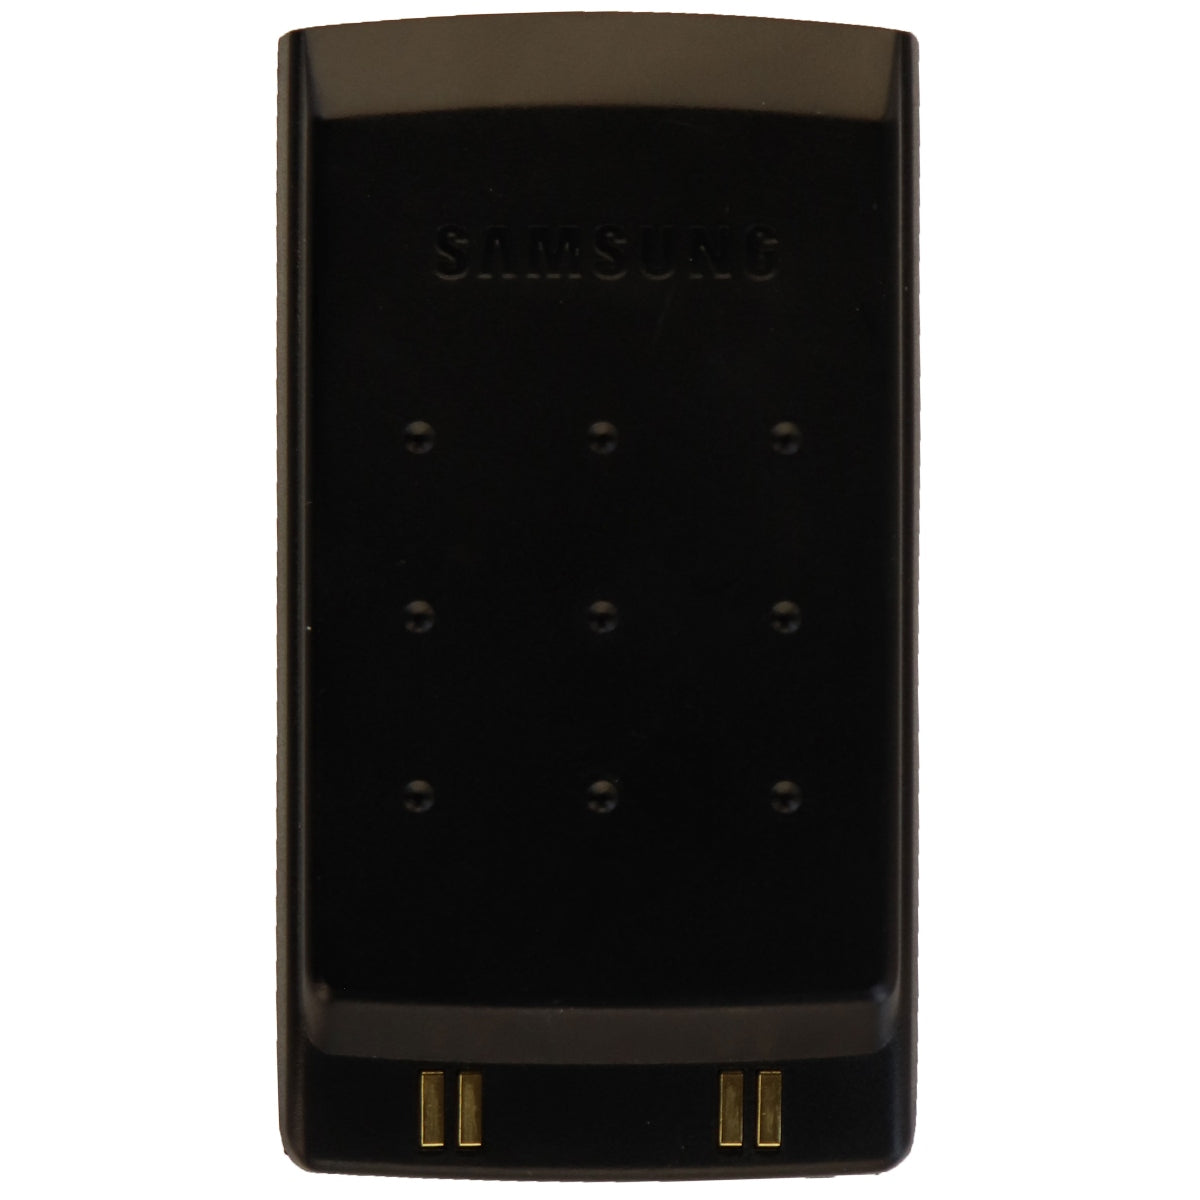 Samsung Standard Li-ion Battery Model BTE41 3.6V Output for Samsung SCH-411 Cell Phone - Batteries Samsung    - Simple Cell Bulk Wholesale Pricing - USA Seller